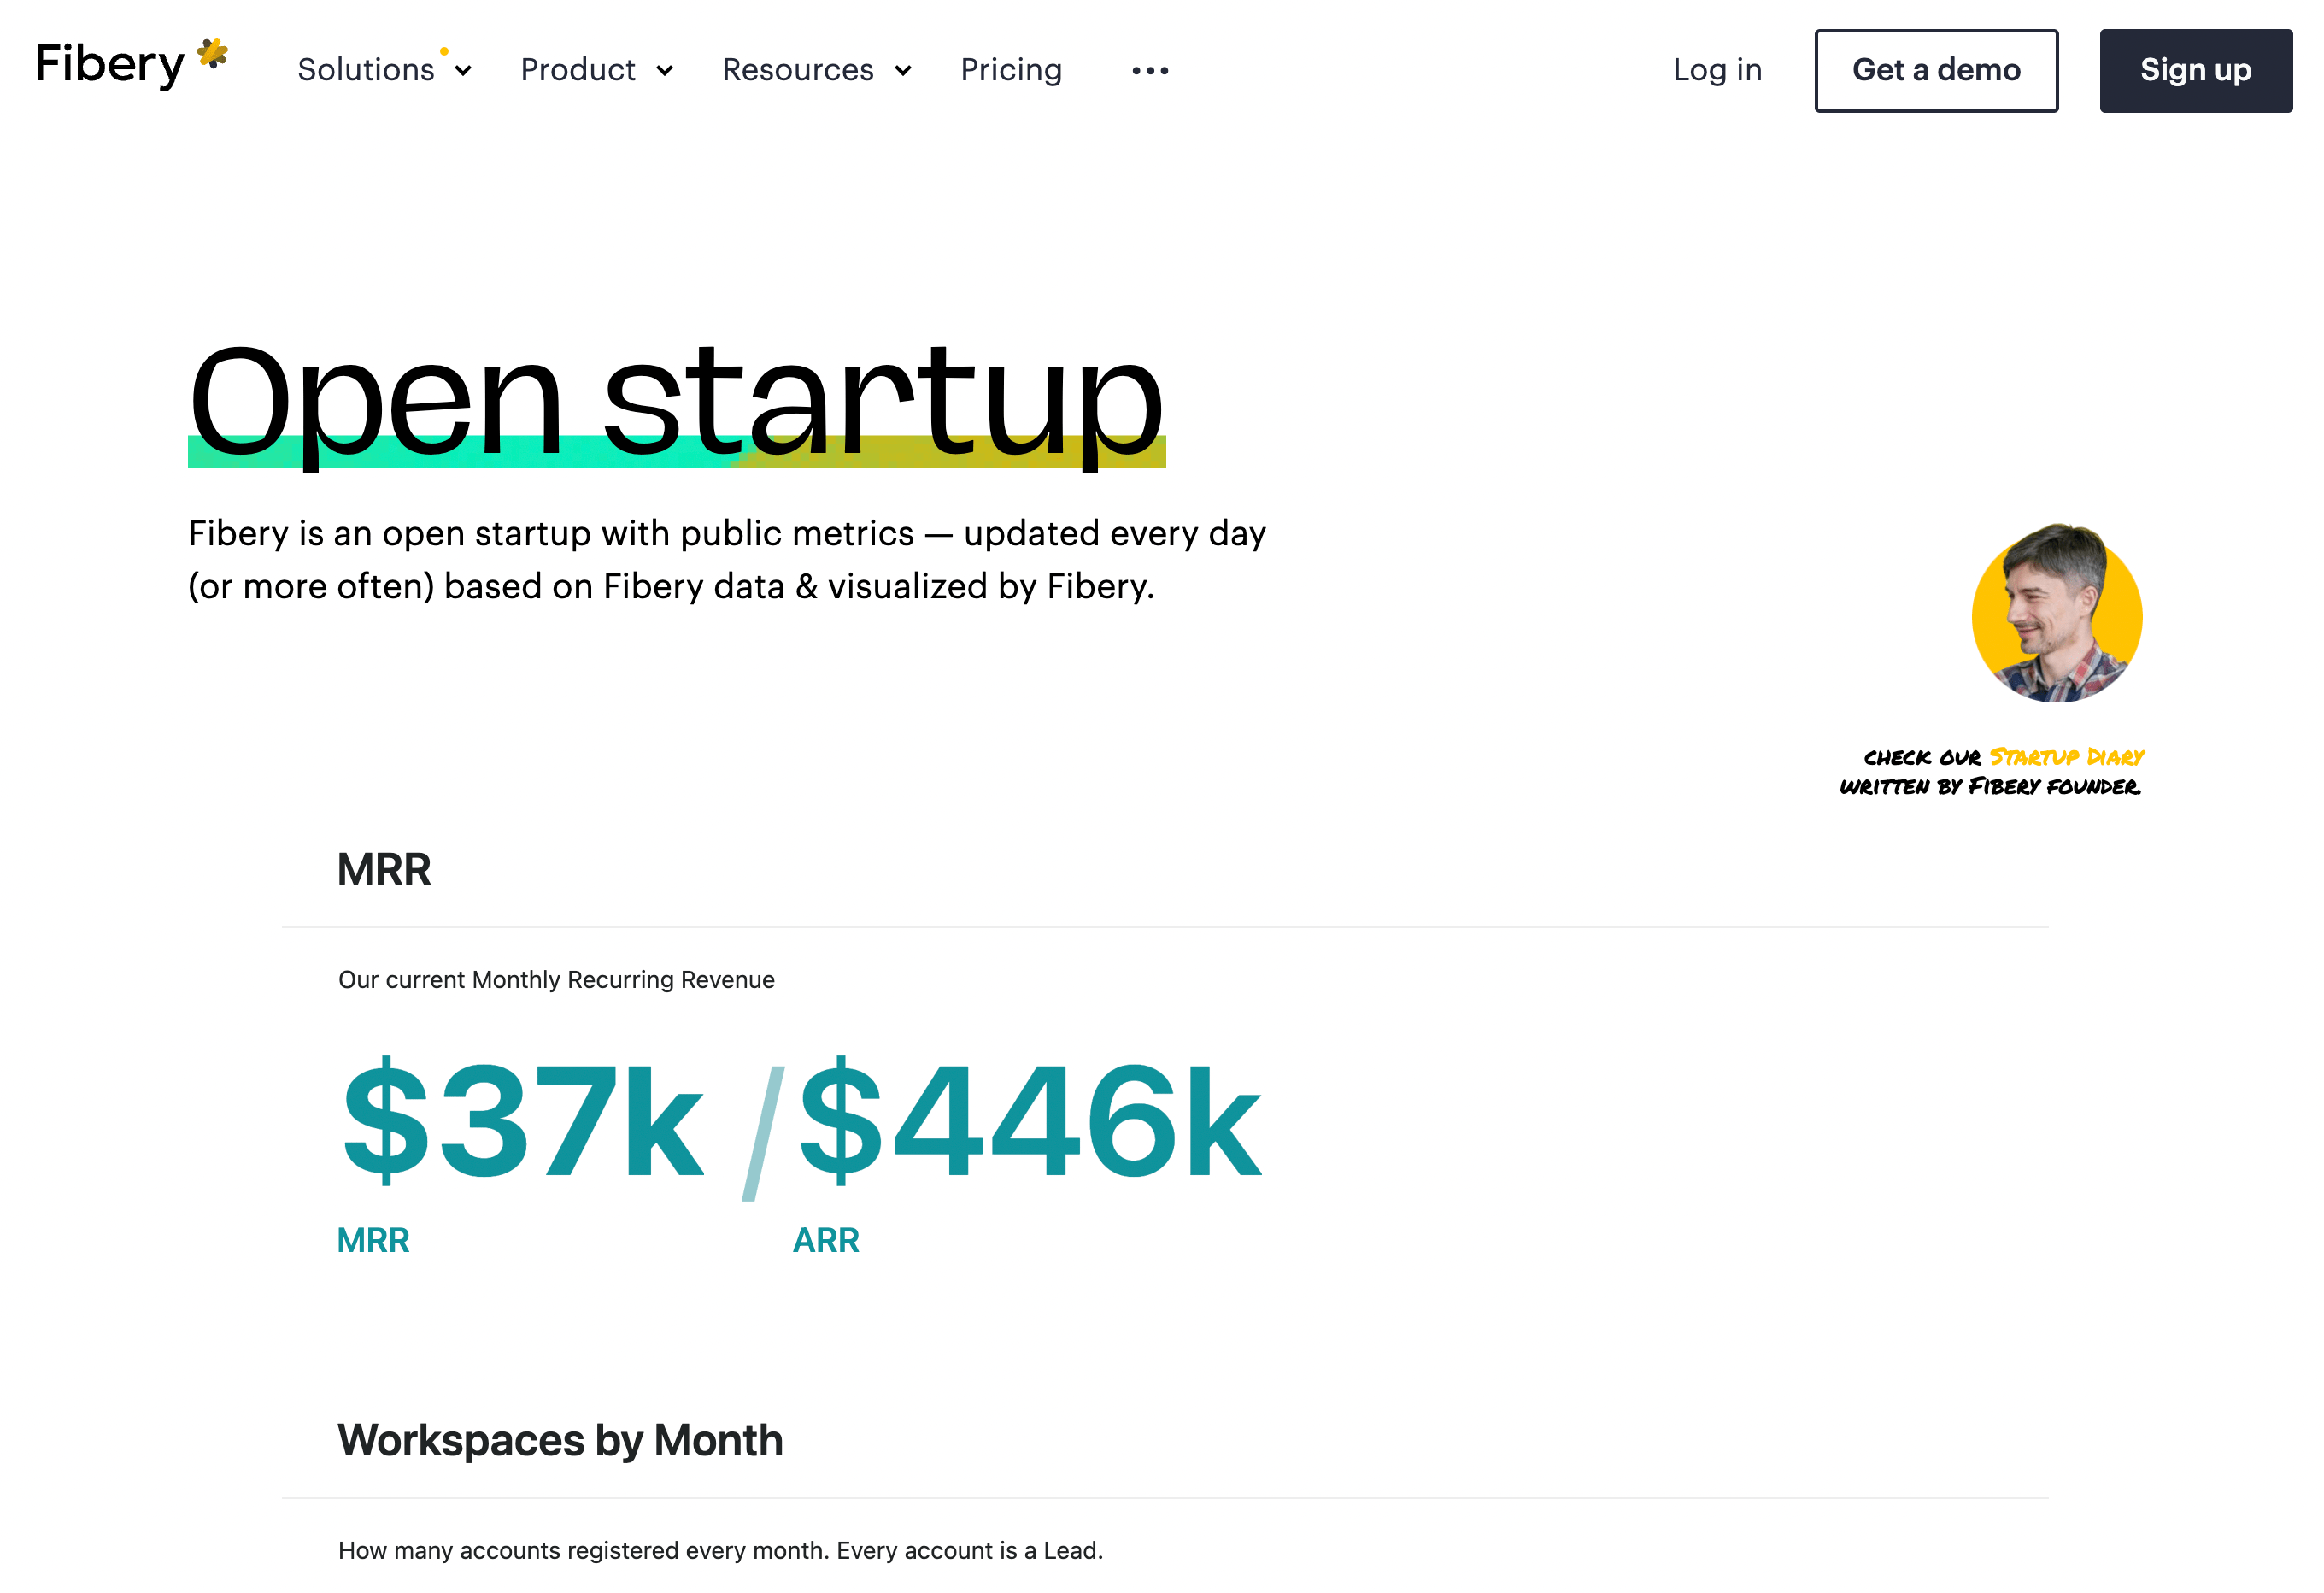 A screenshot of Fibery's Open startup page